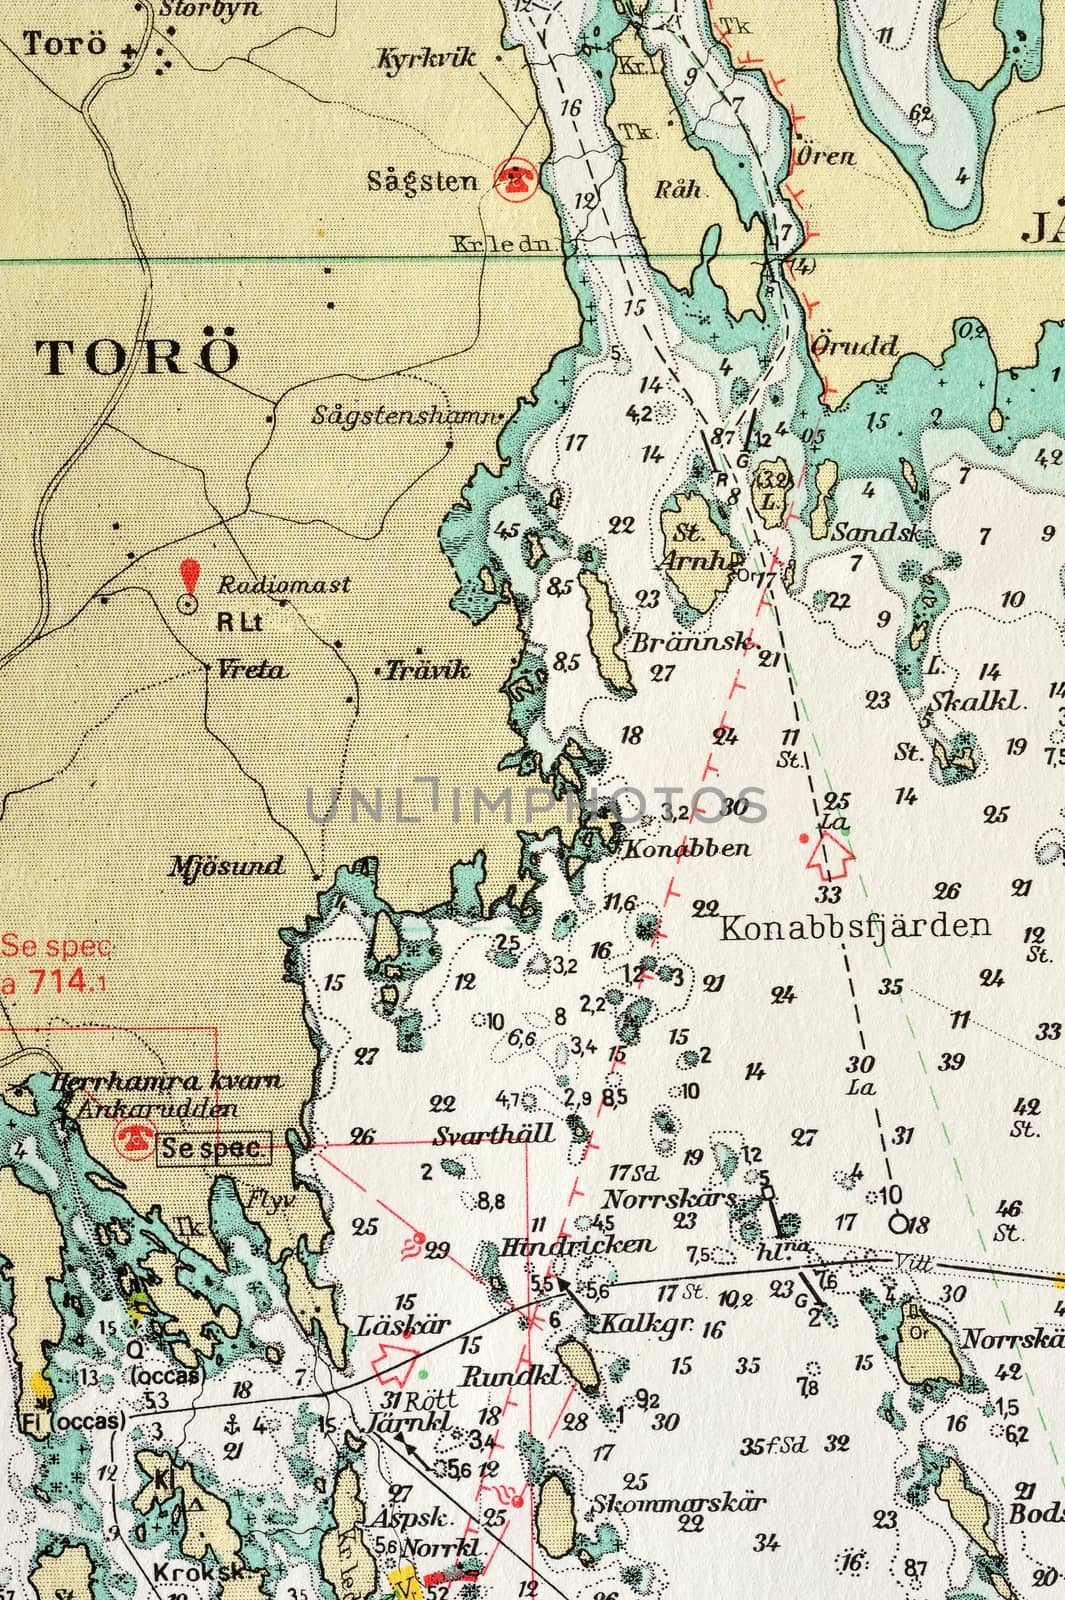 Macro shot of a old marine chart, detailing Stockholm archipelago. 

Picture is from "Batsjokort 1982-83 Serie A LANDSORT-ARHOLMA", created 2013-10-12.